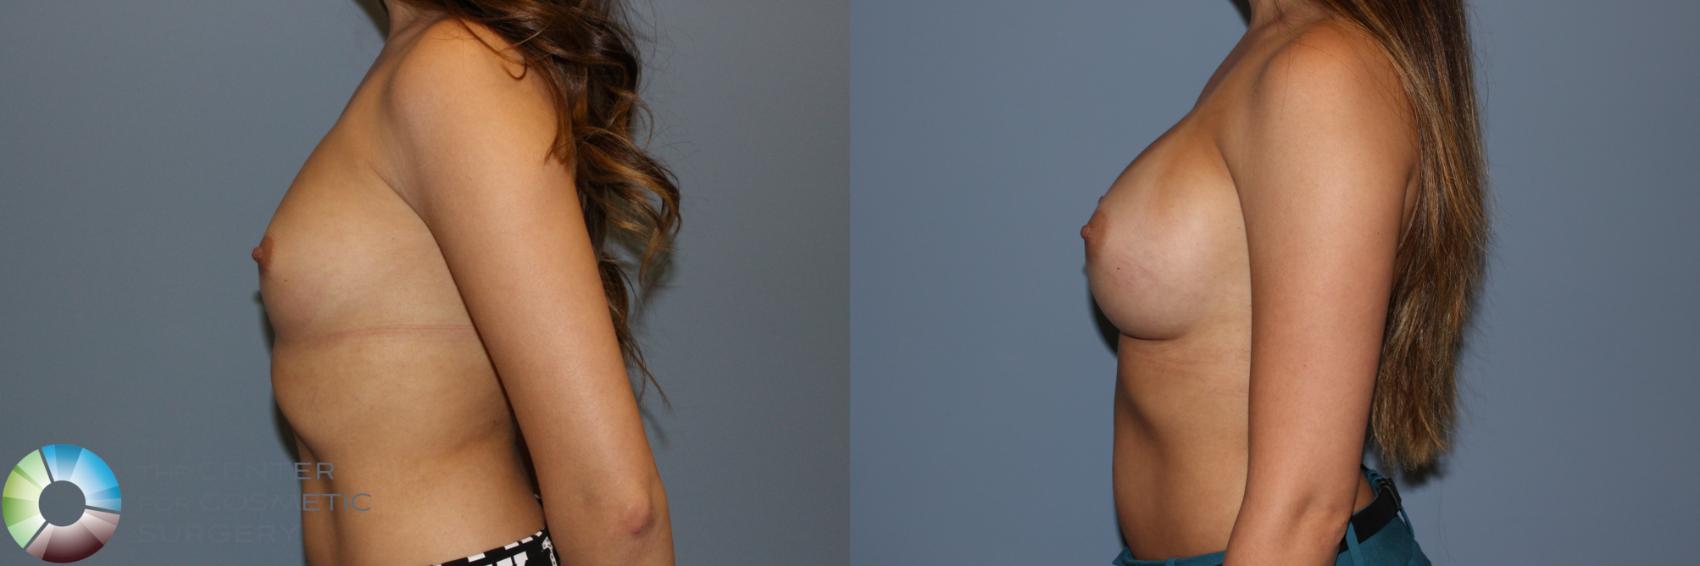 Before & After Breast Augmentation Case 11502 Left Side View in Denver & Golden, CO